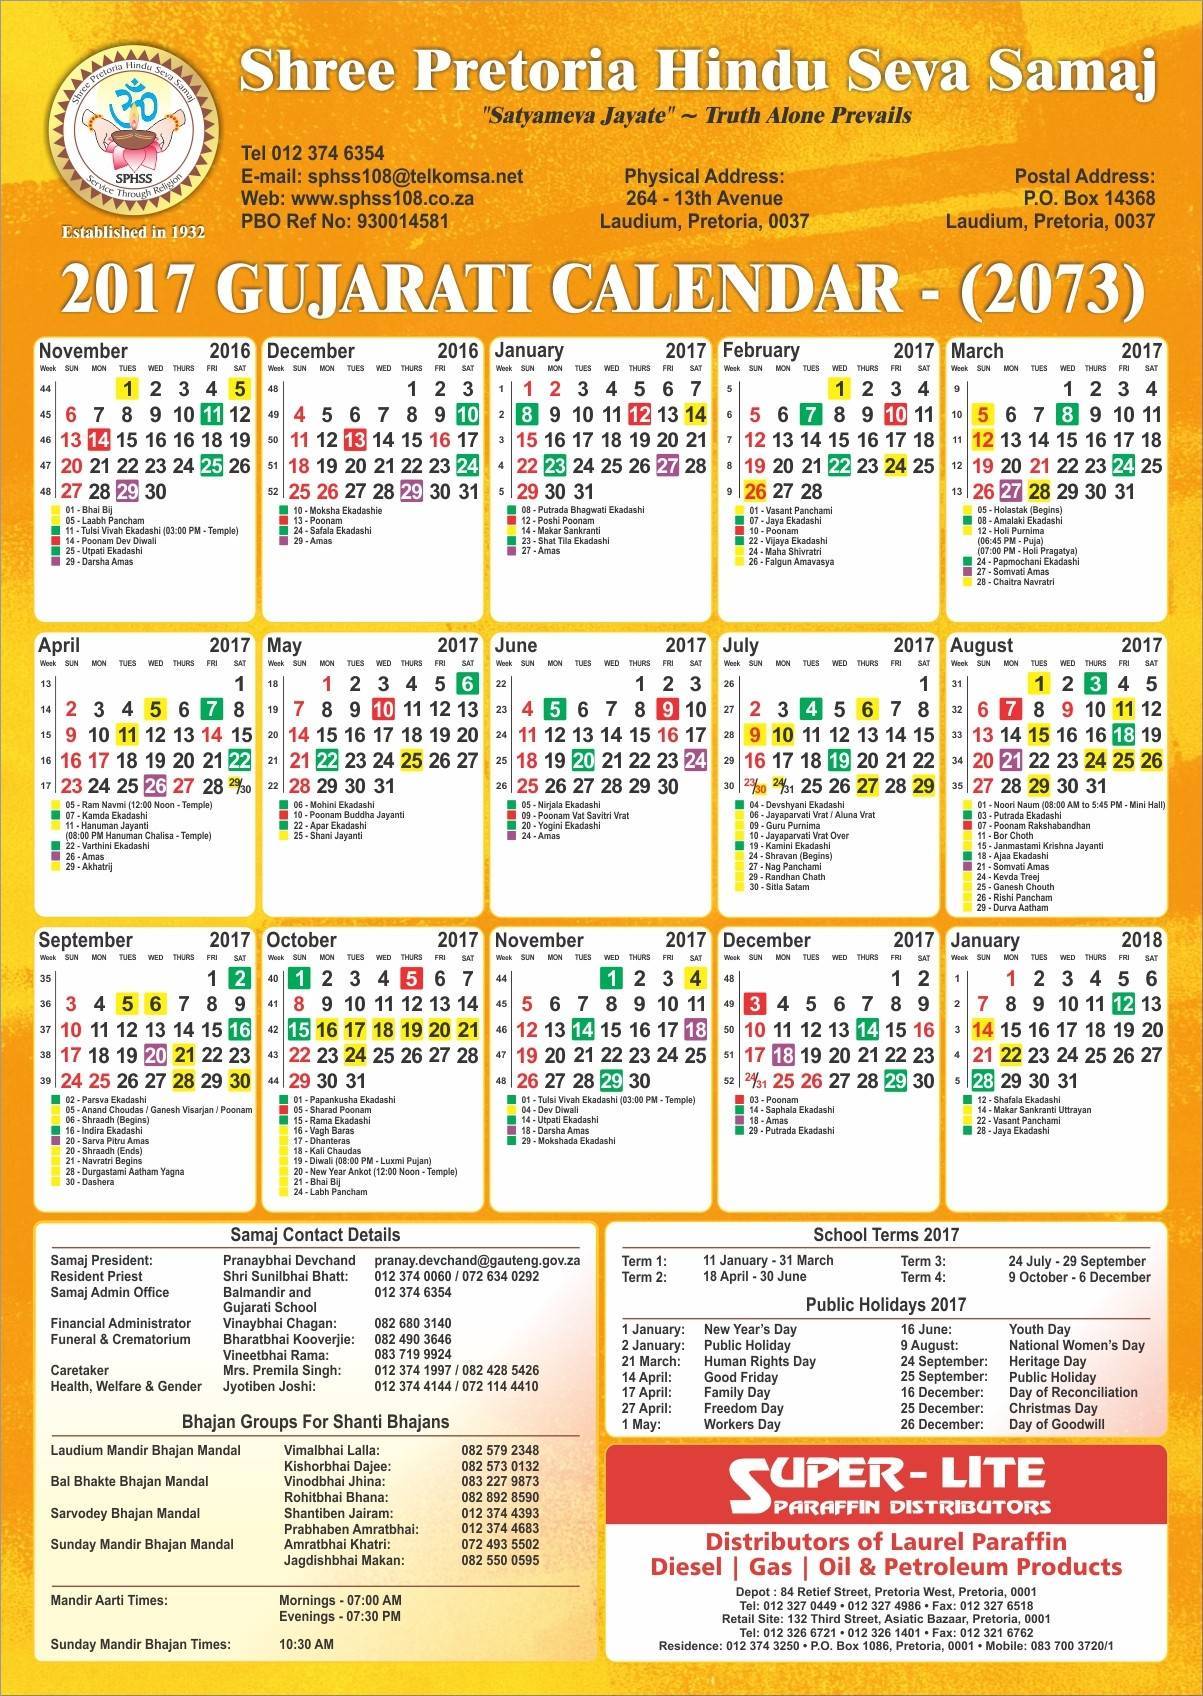 Календарь Экадаши на январь